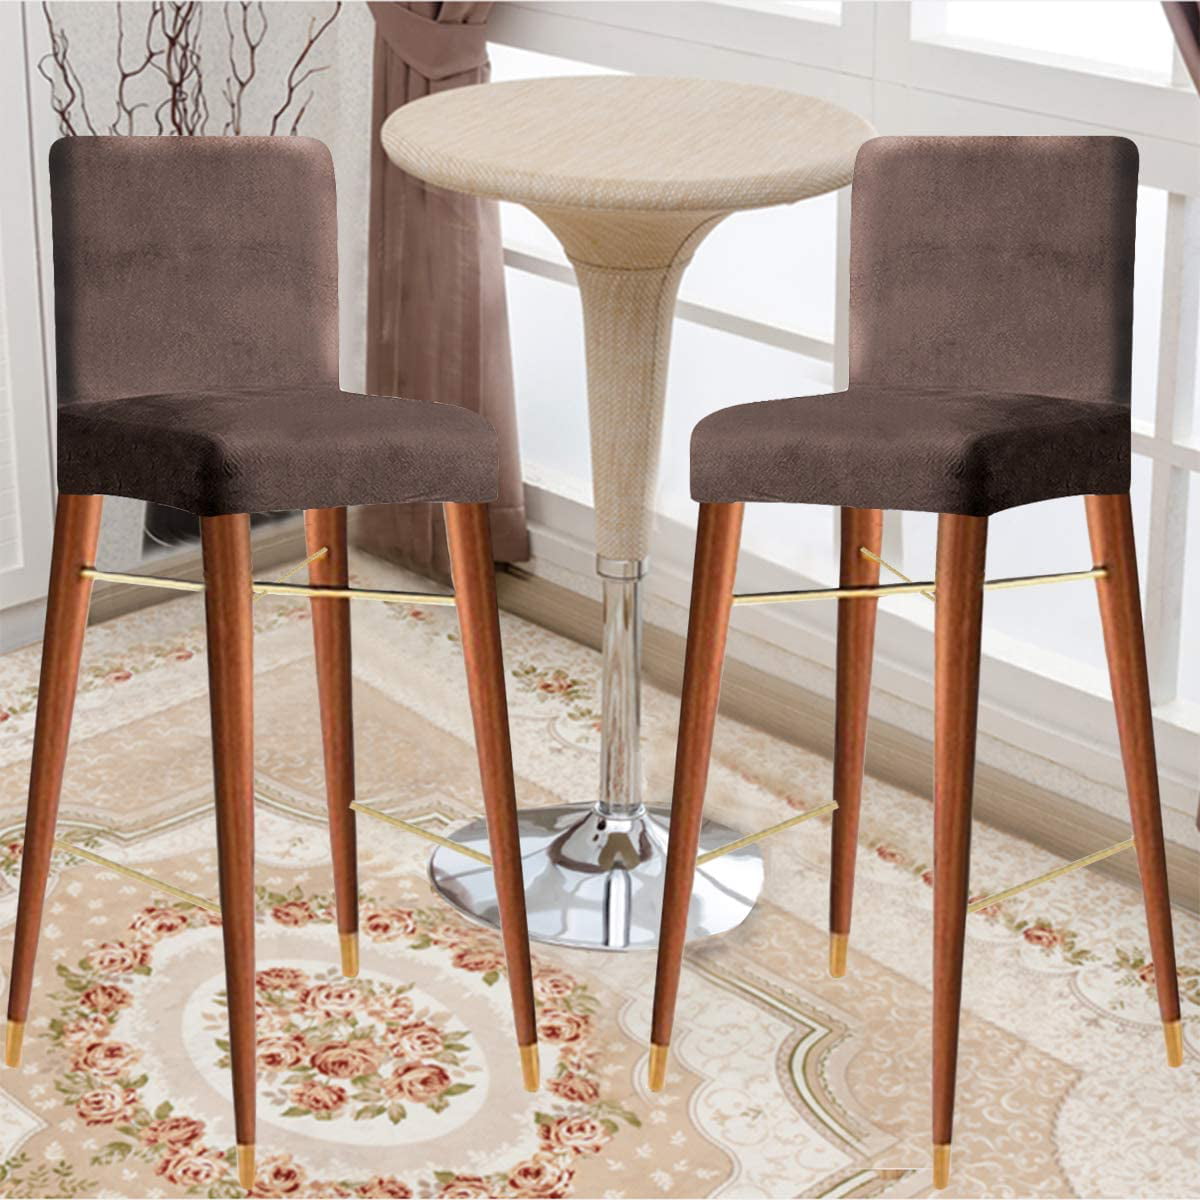 KELUINA Velvet Bar Stool Chair Covers with Backrest,Elastic Seat Home Soft Chair 